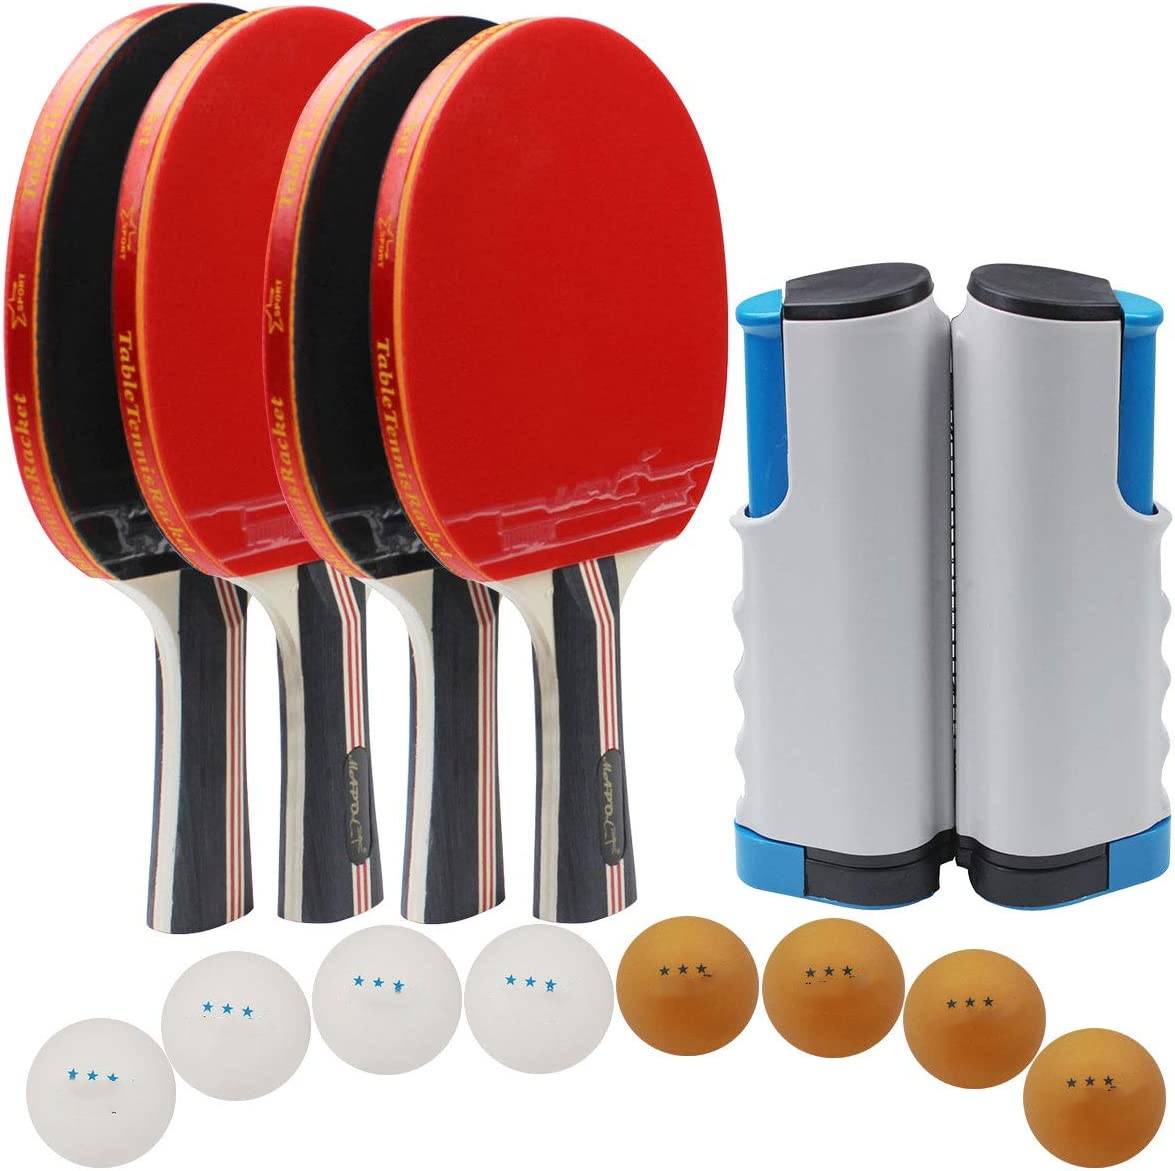 Good quality ping pong paddles 0618